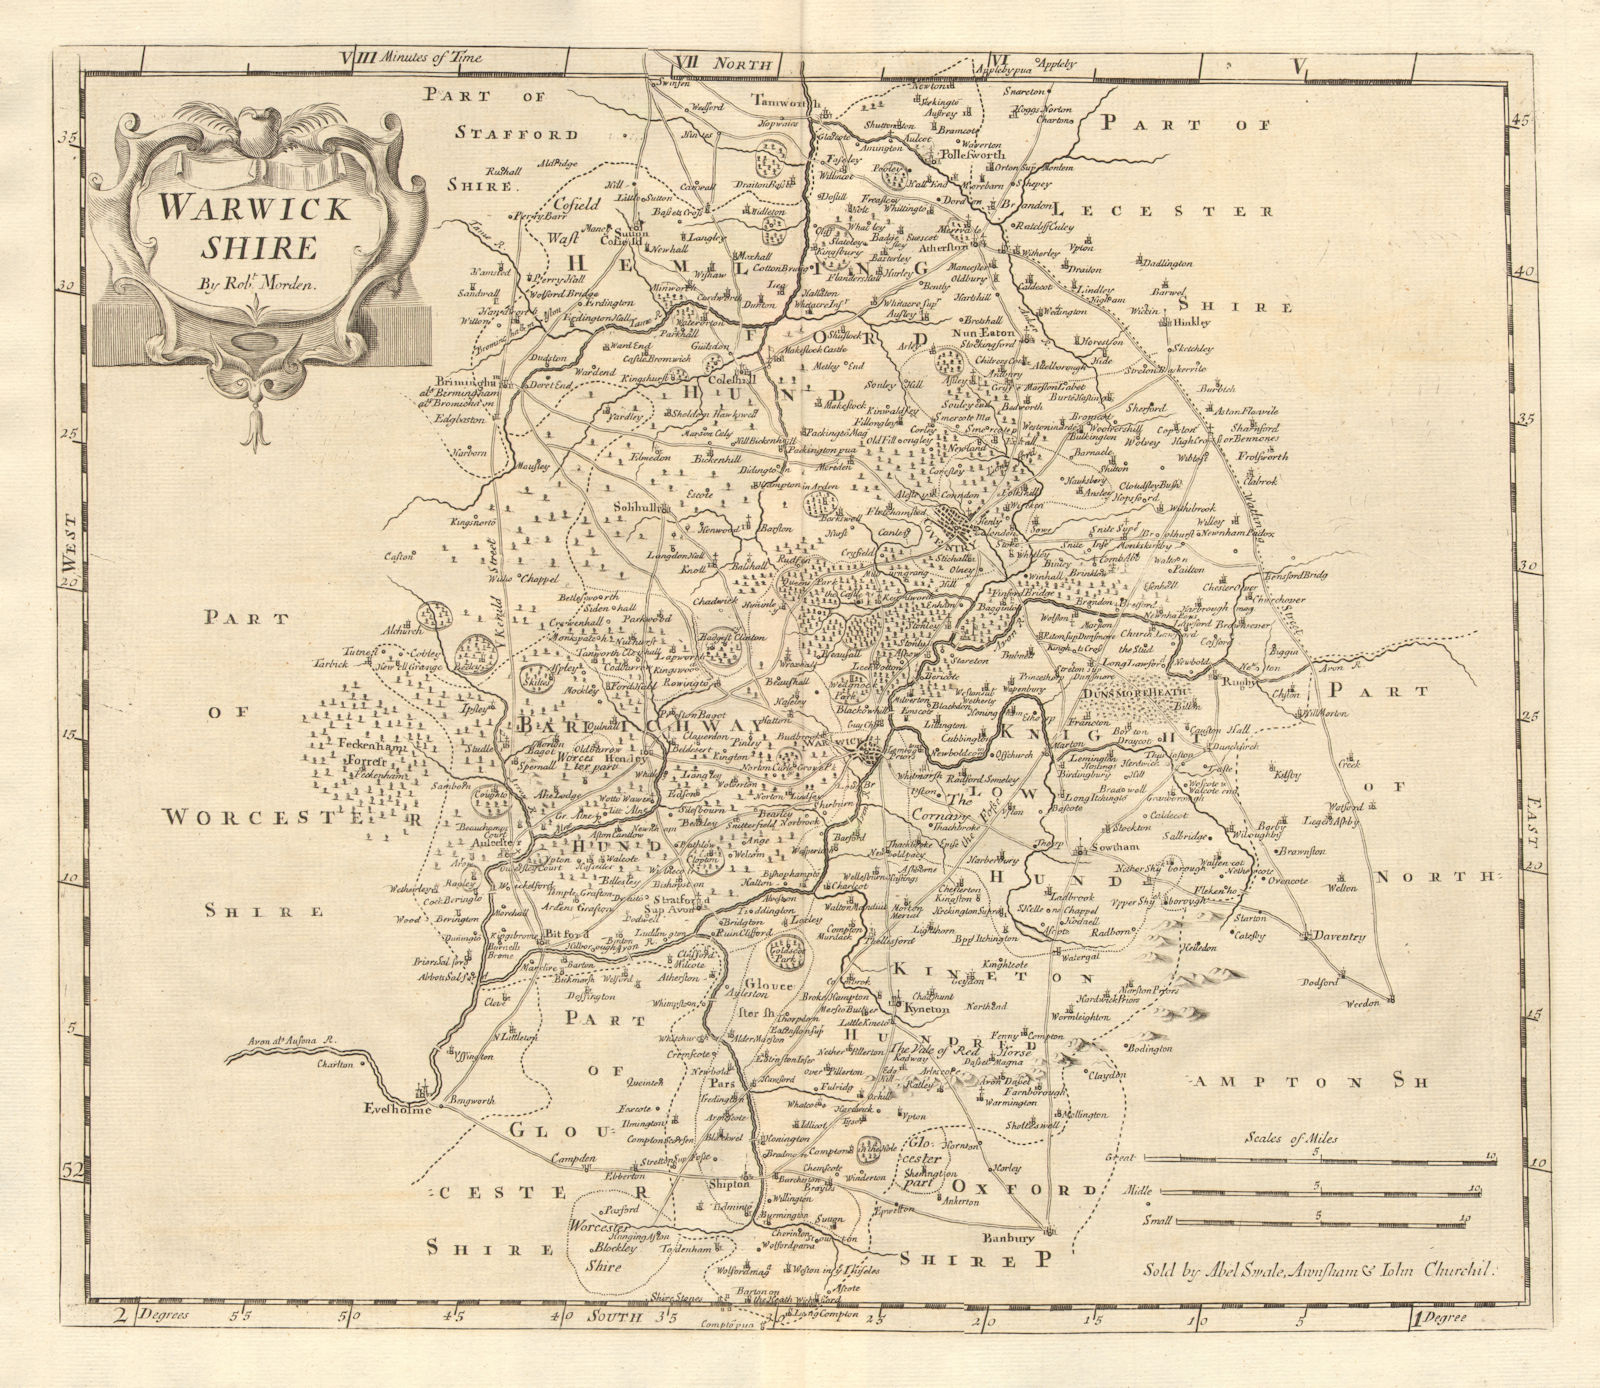 Associate Product Warwickshire. 'WARWICK SHIRE' by ROBERT MORDEN from Camden's Britannia 1772 map